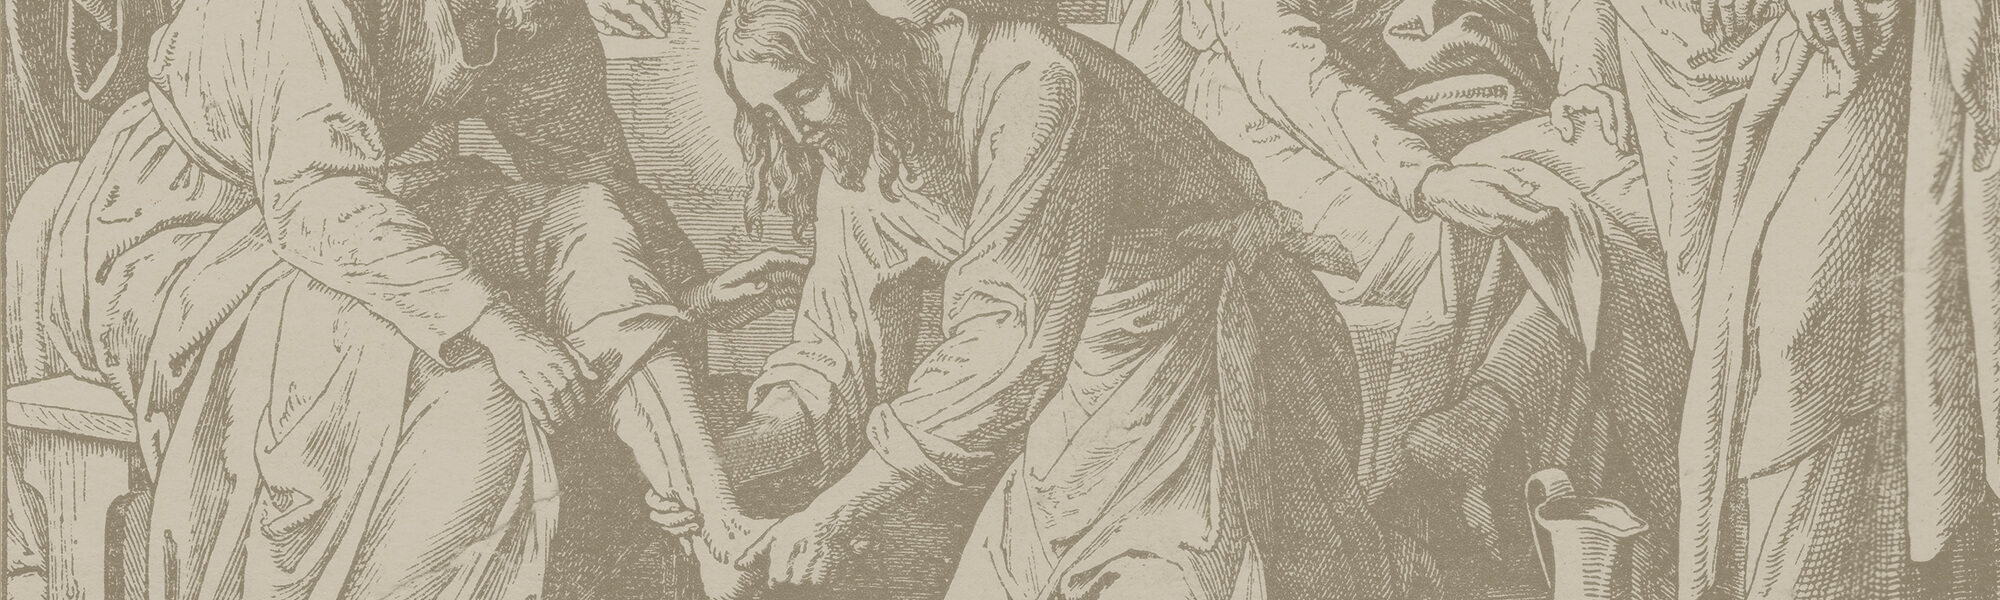 Jesus Washed Disciples Feet KLA Blog 02-2021_2000x600 jpg